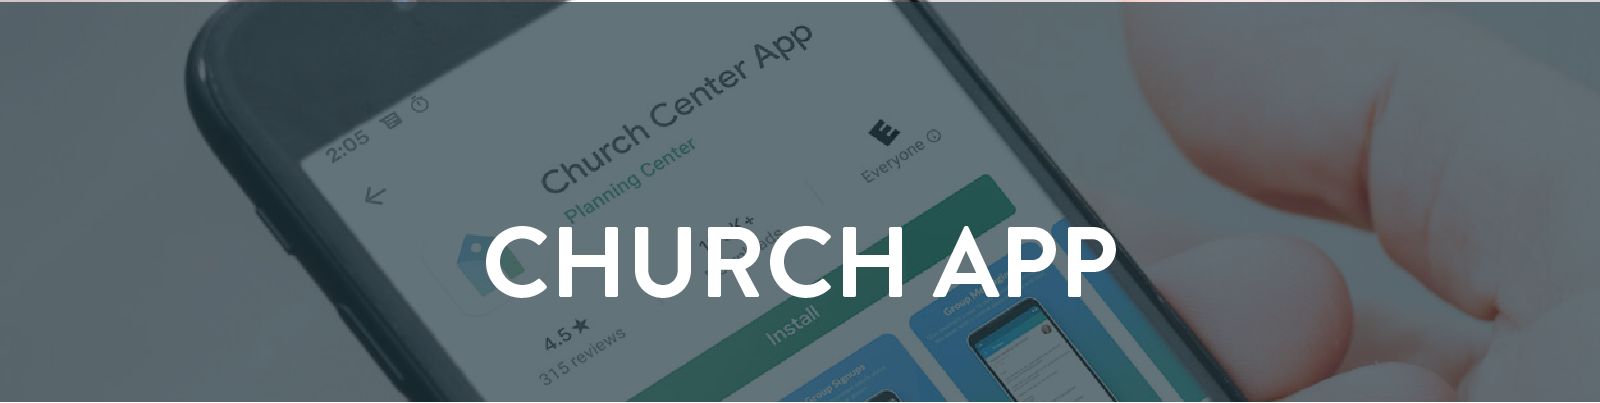 Church Center App New Life Fellowship